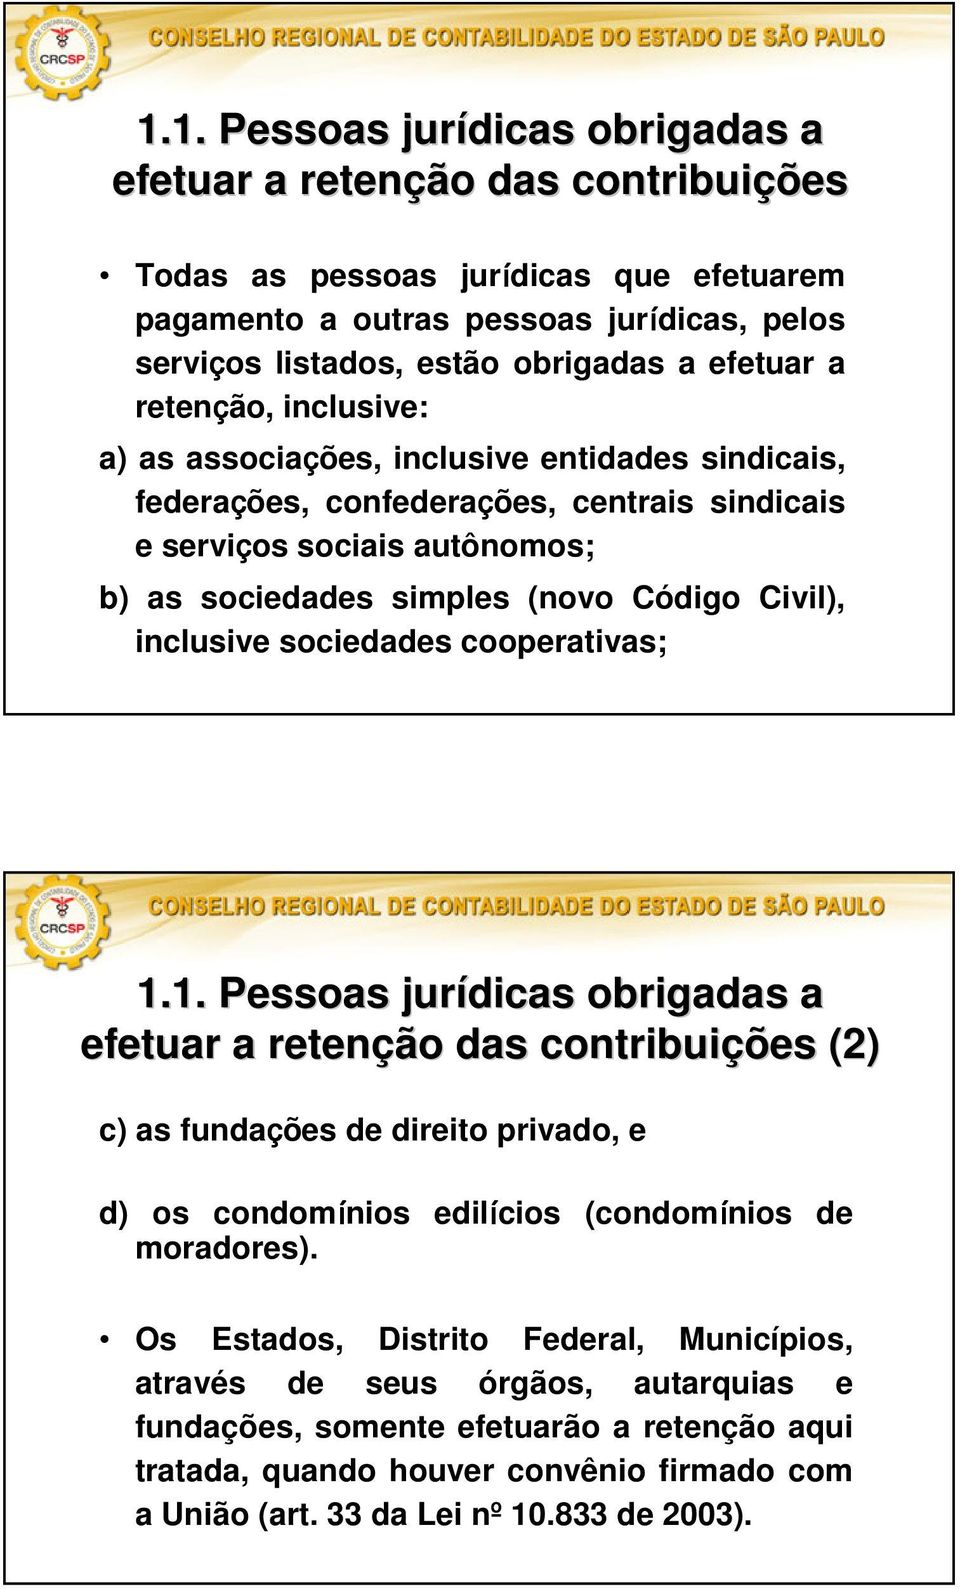 Civil), inclusive sociedades cooperativas; 1.